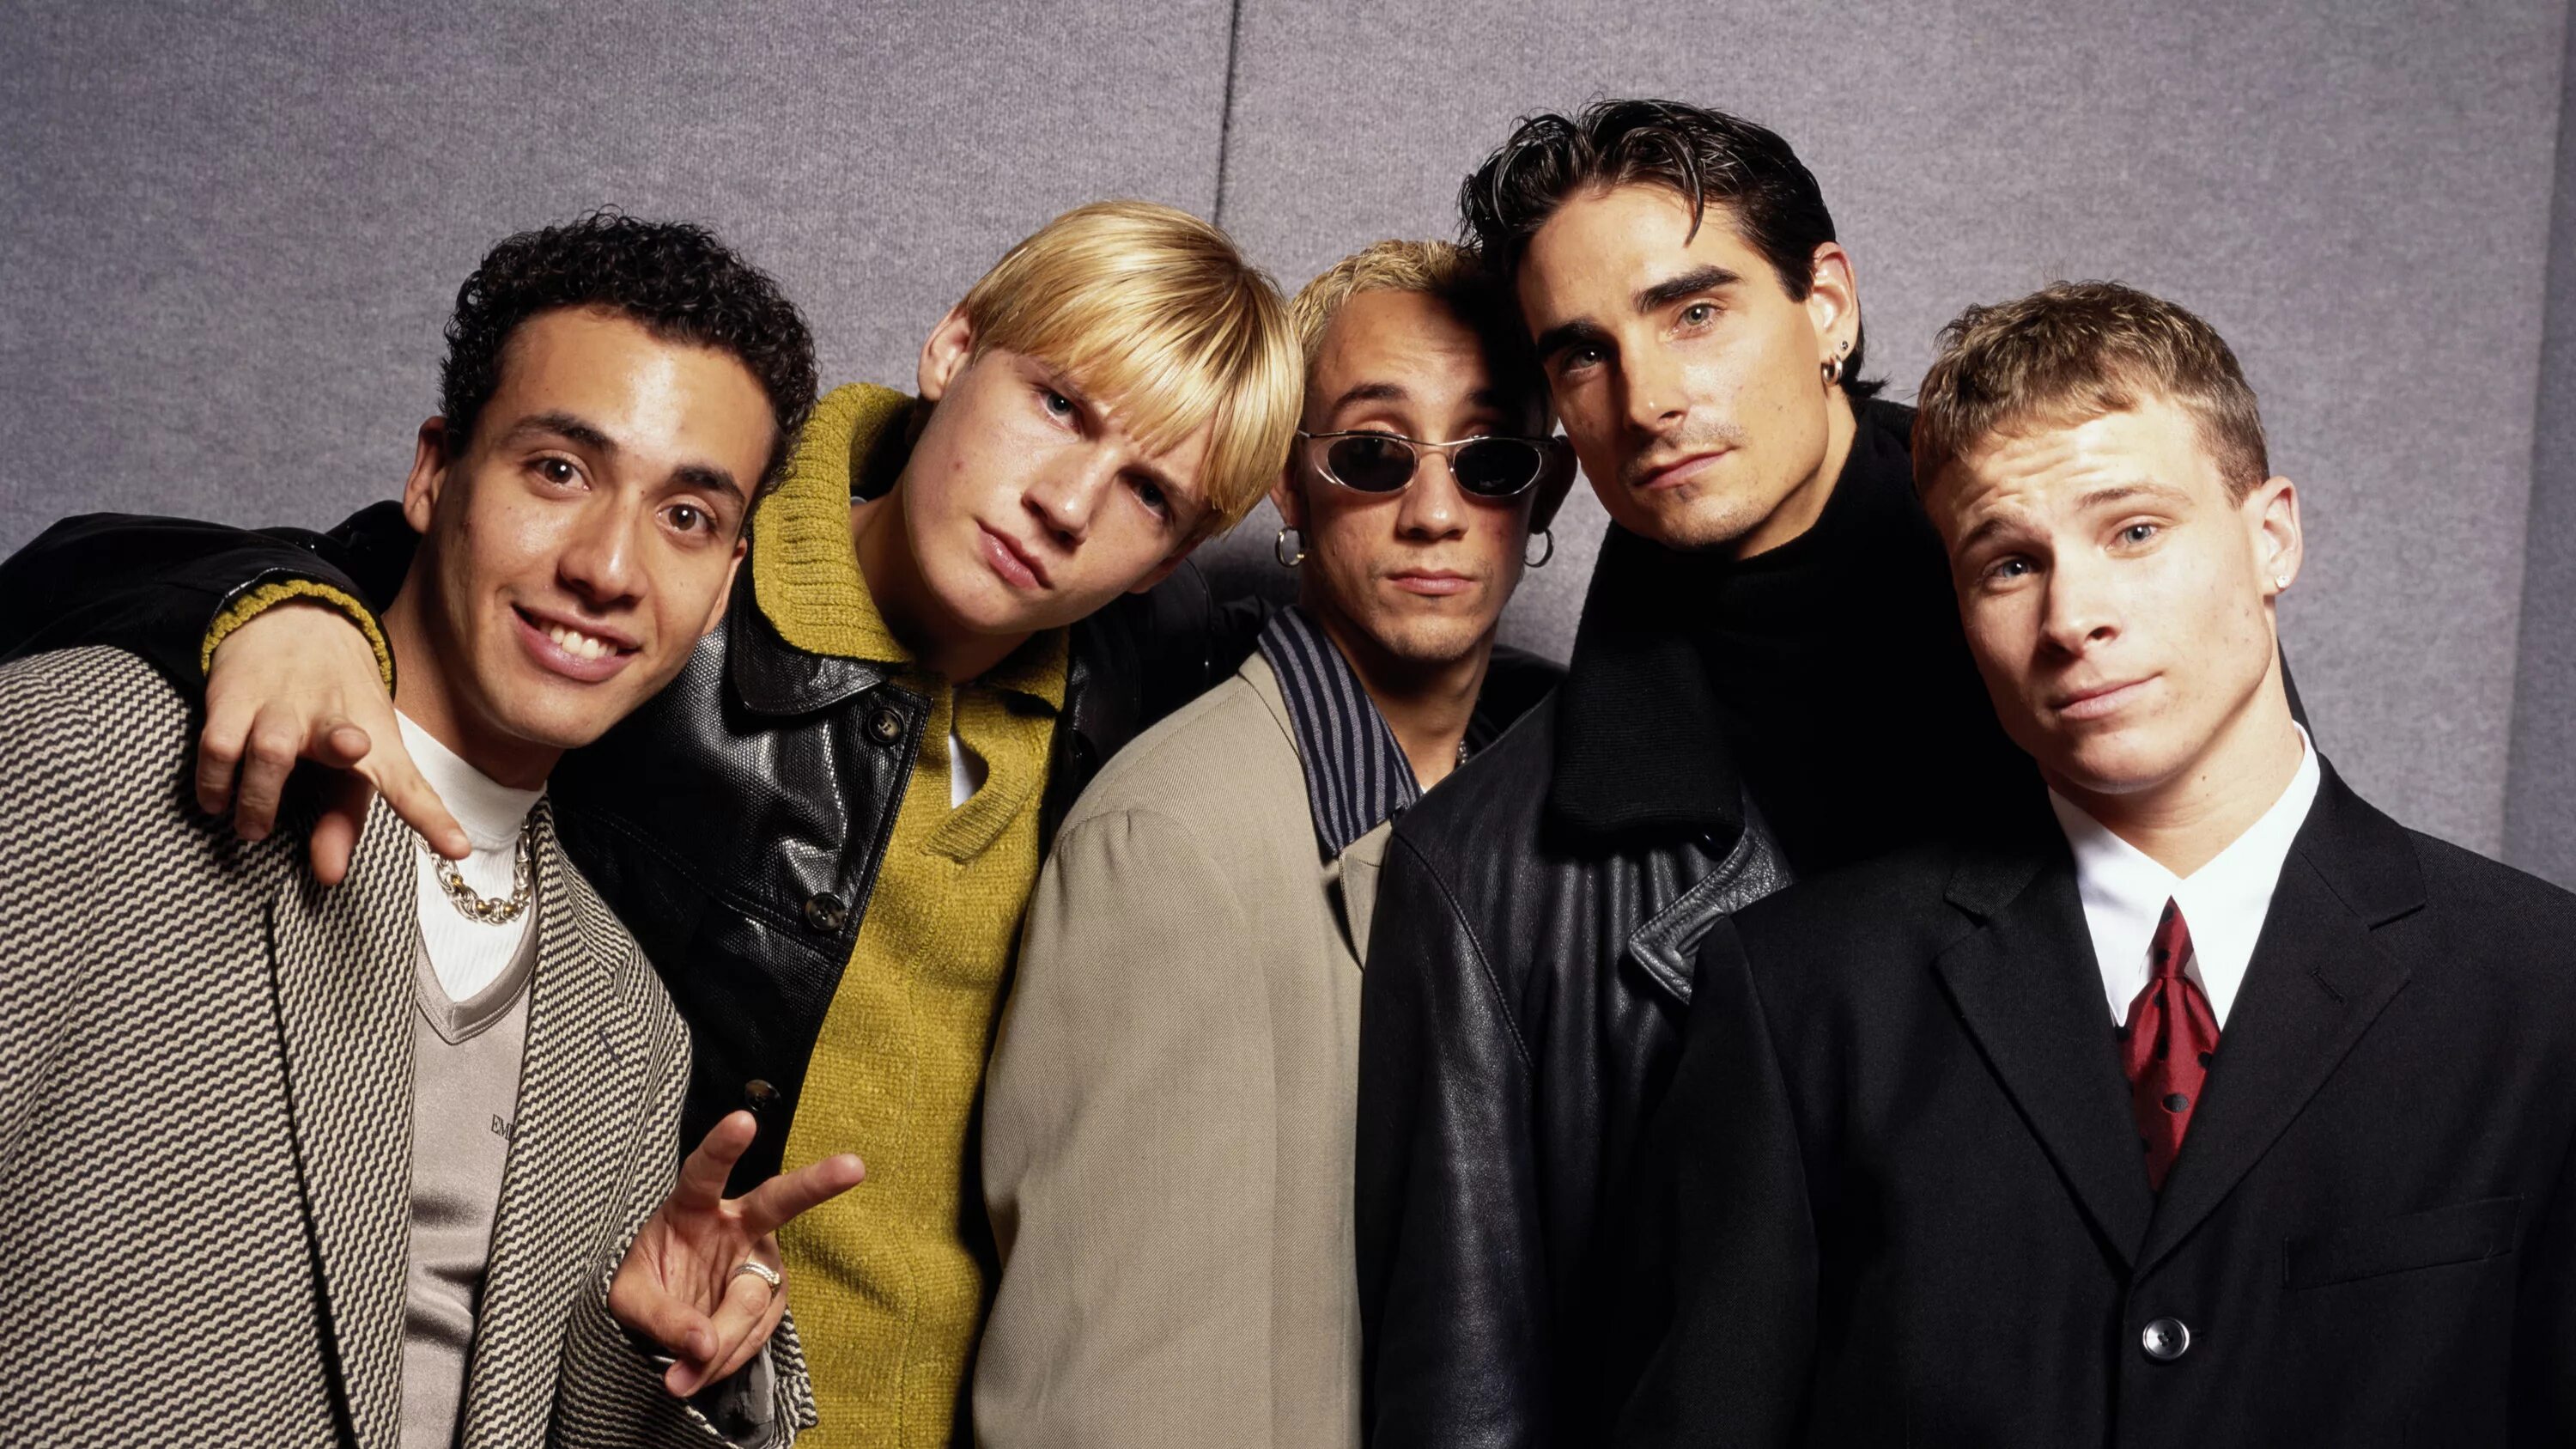 2000 х 8. Группа Backstreet boys. Backstreet boys 1993. Backstreet boys 2000. Backstreet boys состав группы.